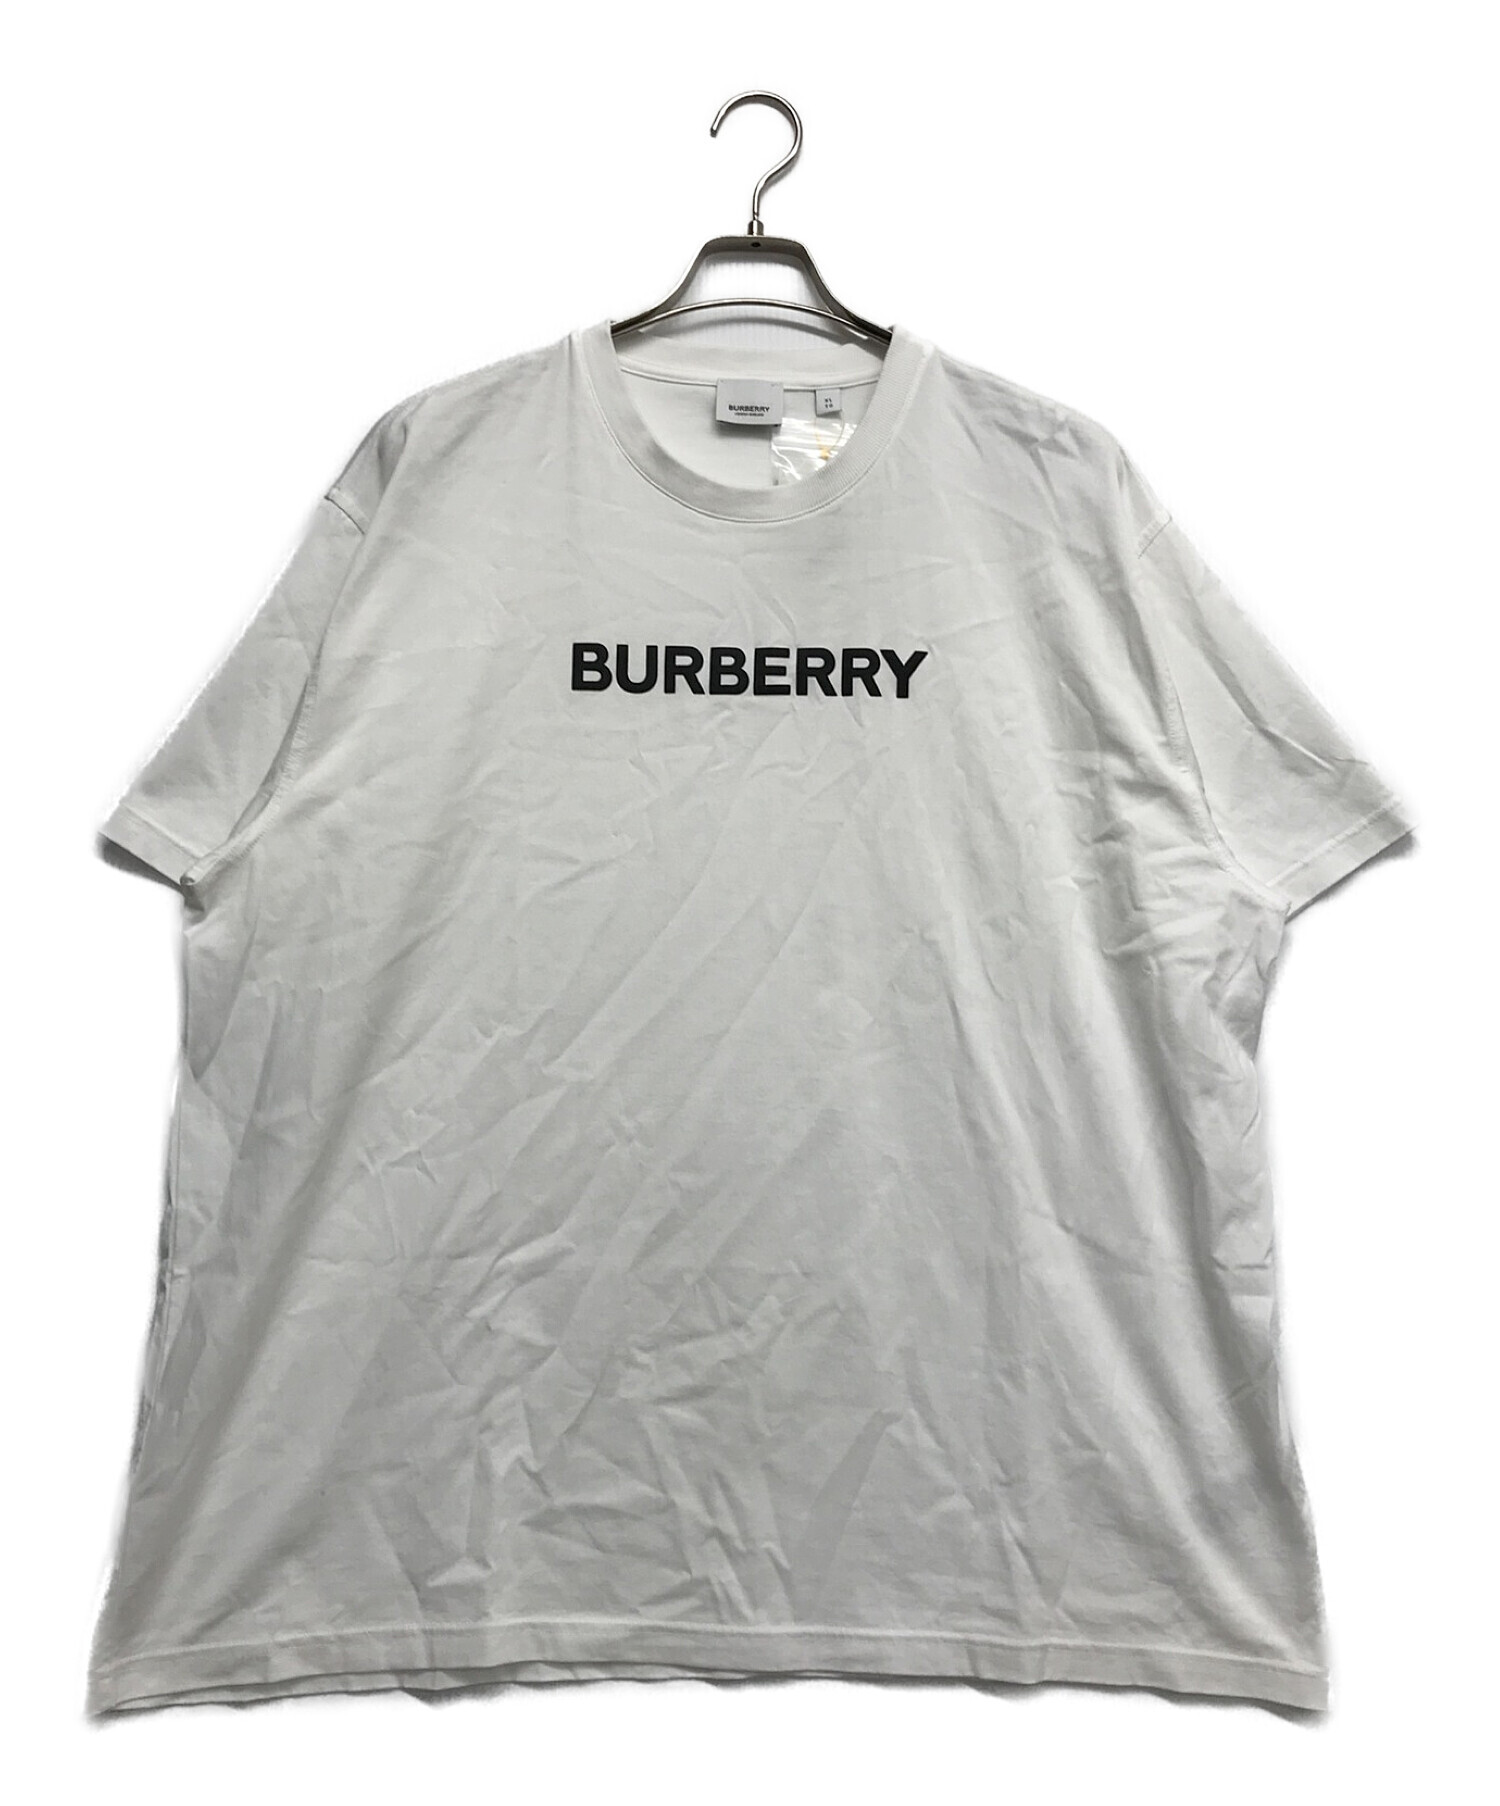 BURBERRY LONDON ENGLAND (バーバリー ロンドン イングランド) クルーネックTシャツ ホワイト サイズ:XL